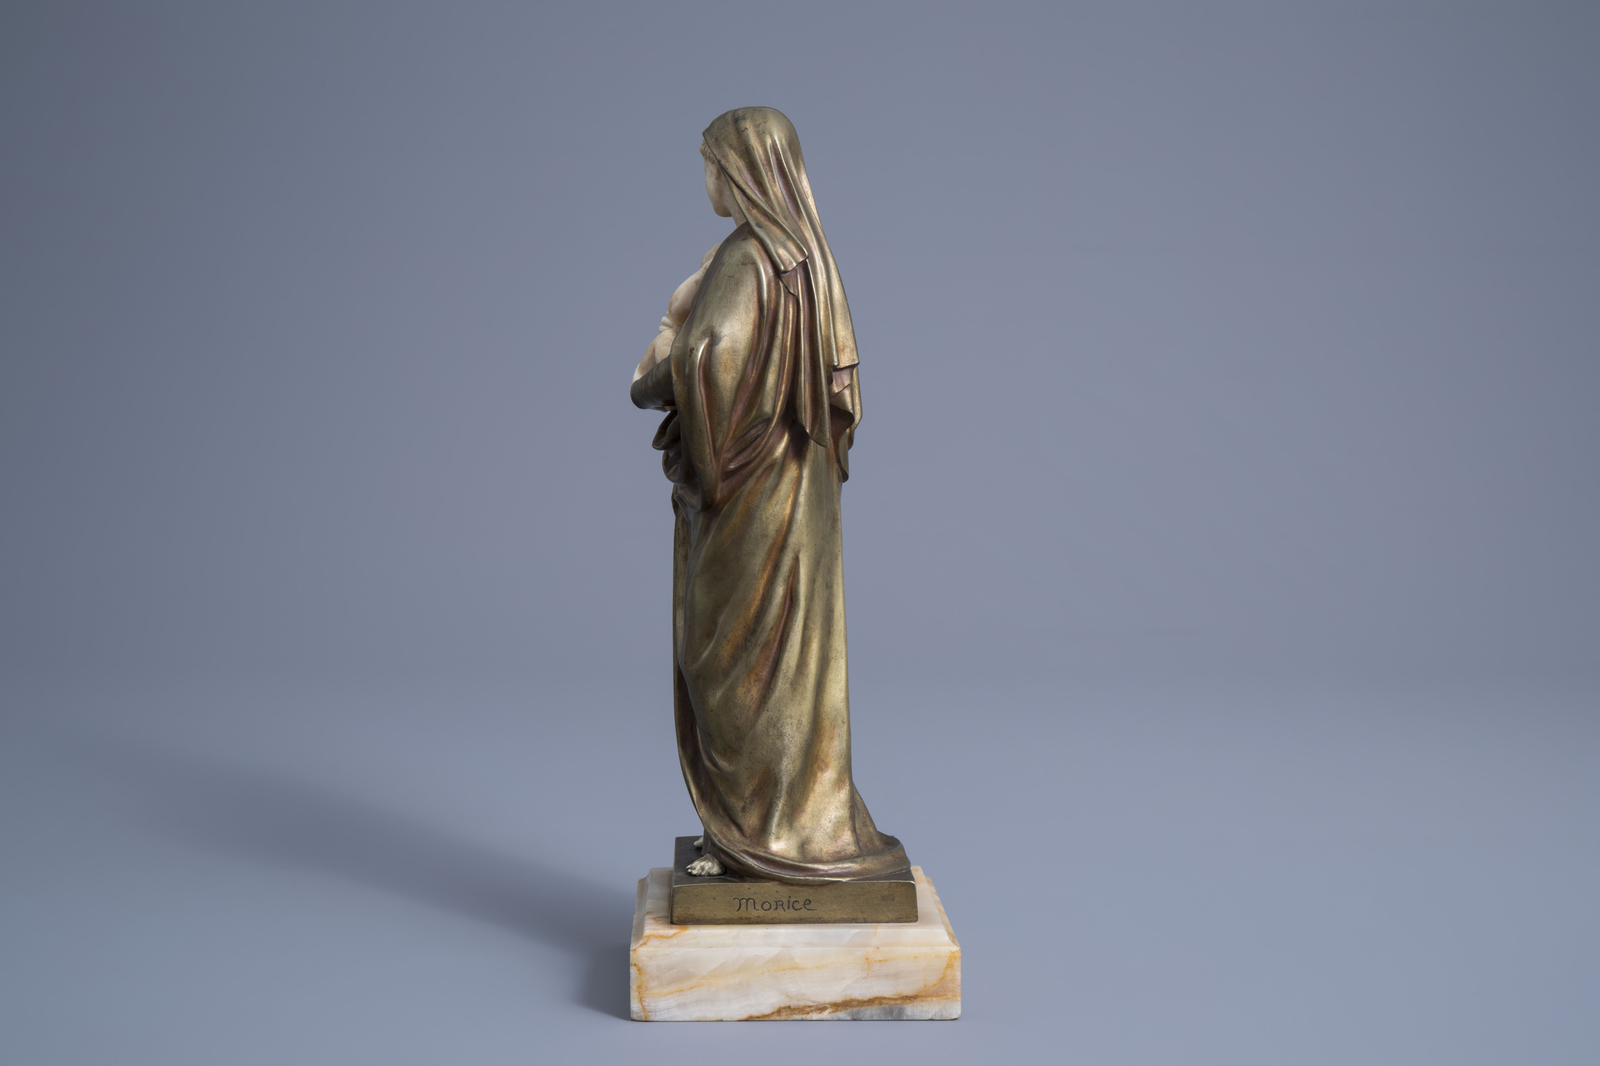 LŽon Morice (1868-1958): The Virgin and Child, chryselephantine on an onyx marble base - Image 5 of 8